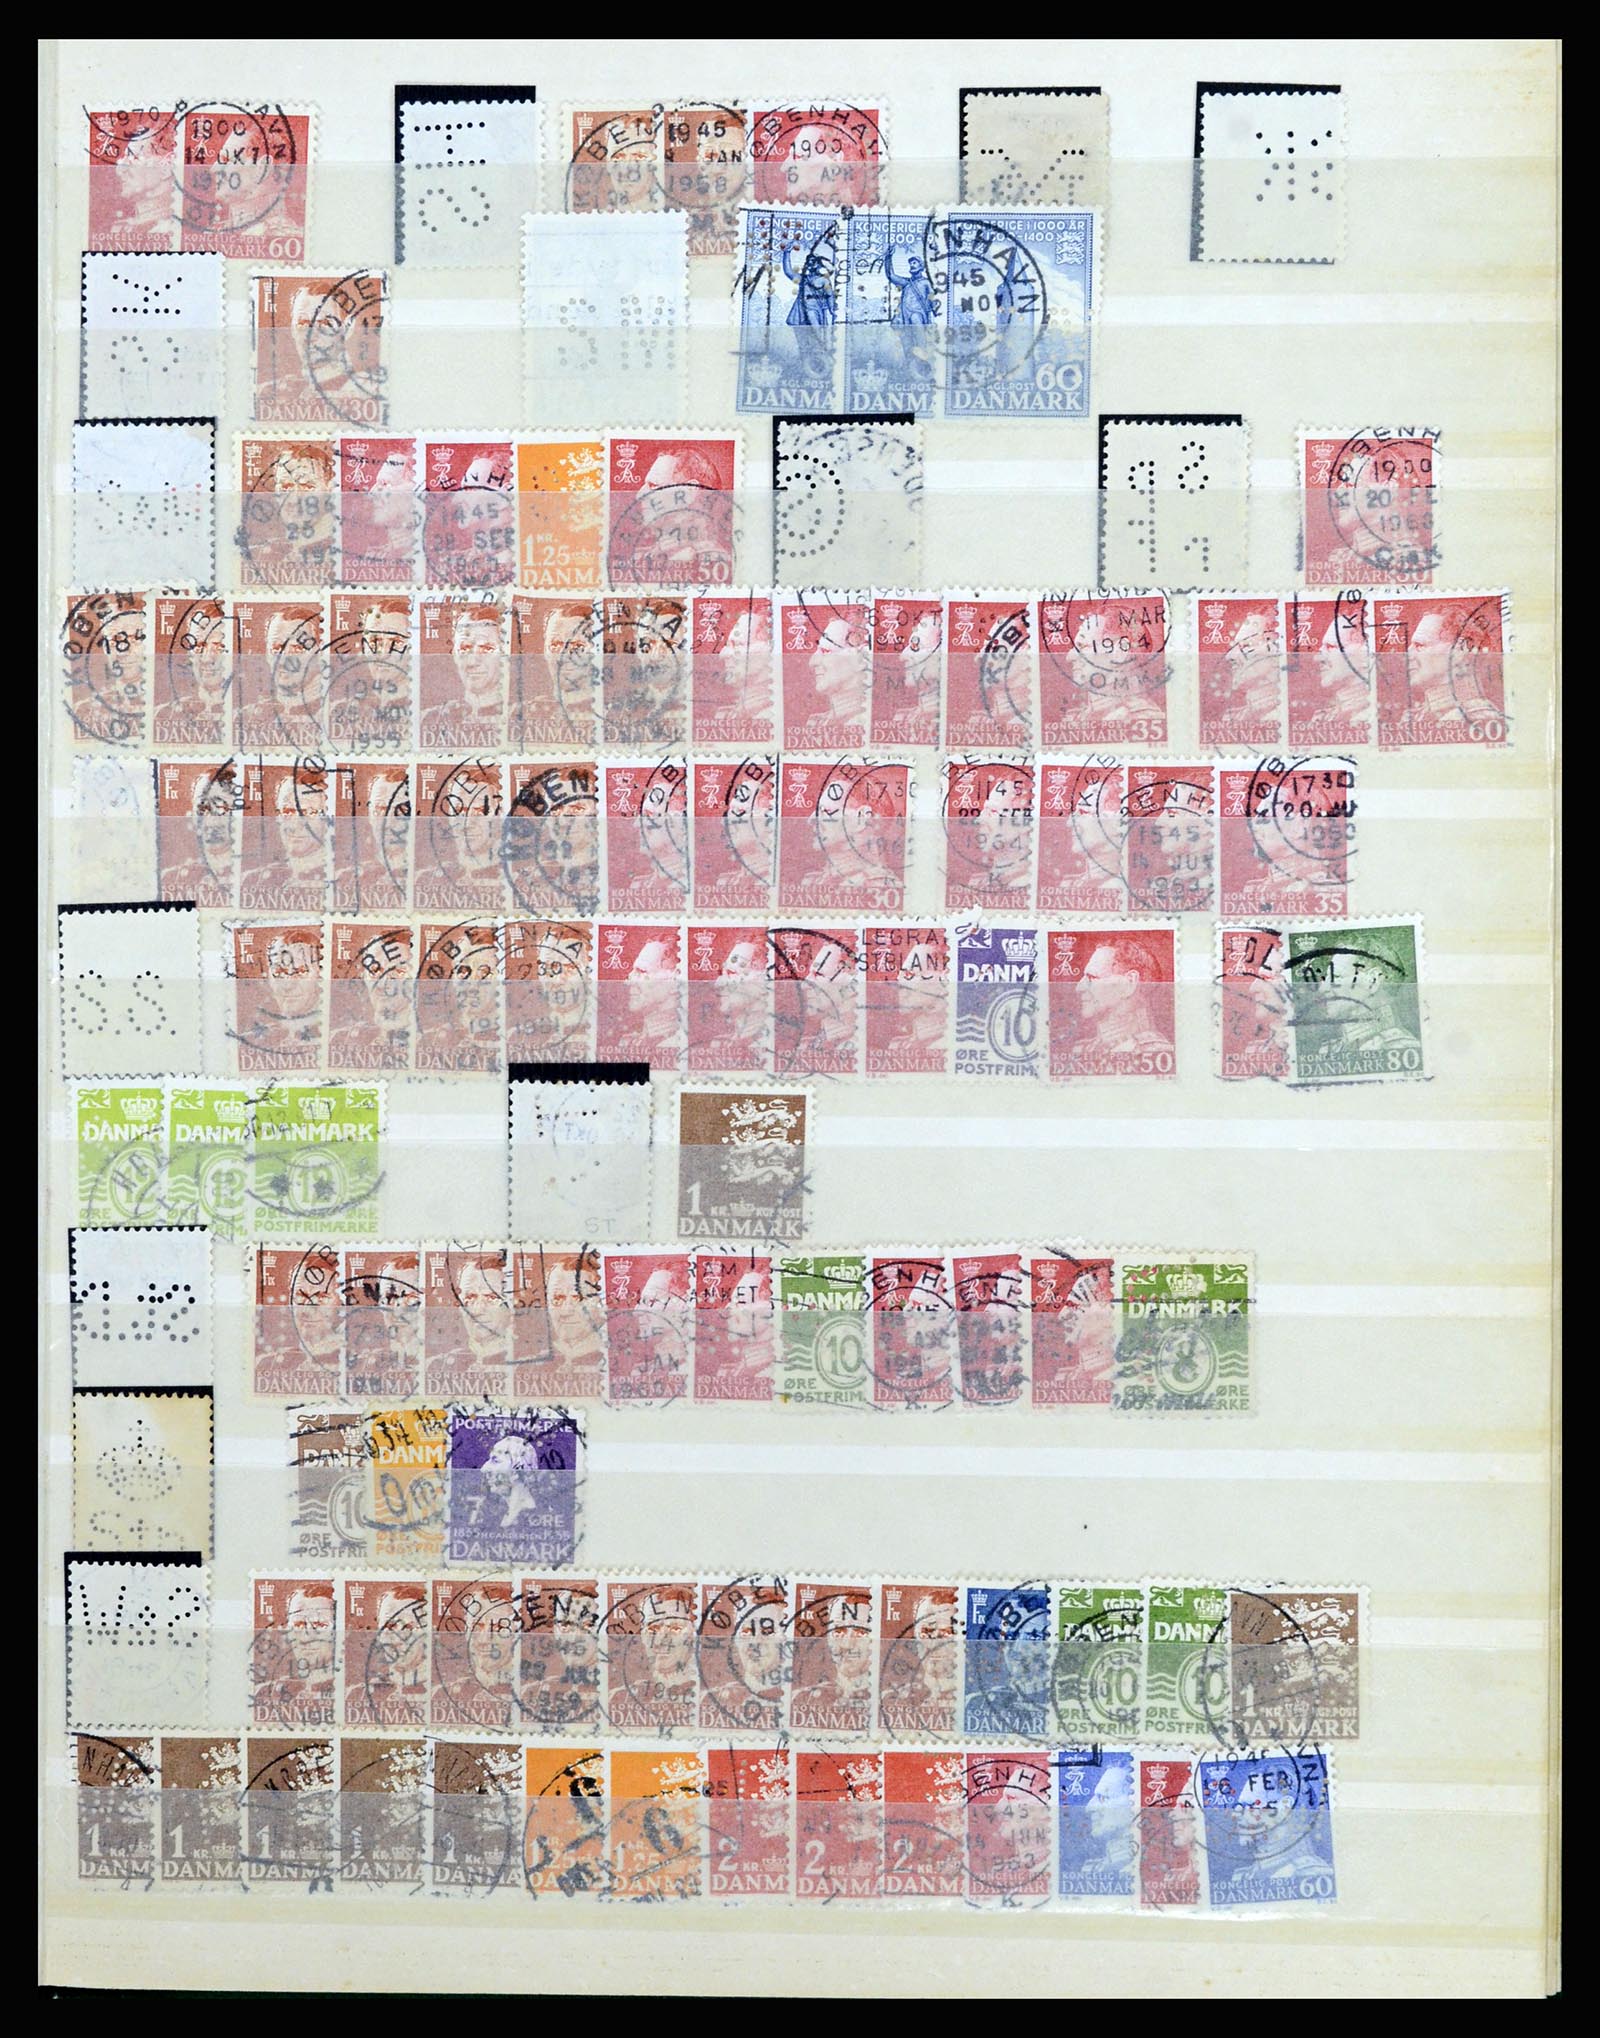 37056 089 - Stamp collection 37056 Denmark perfins.